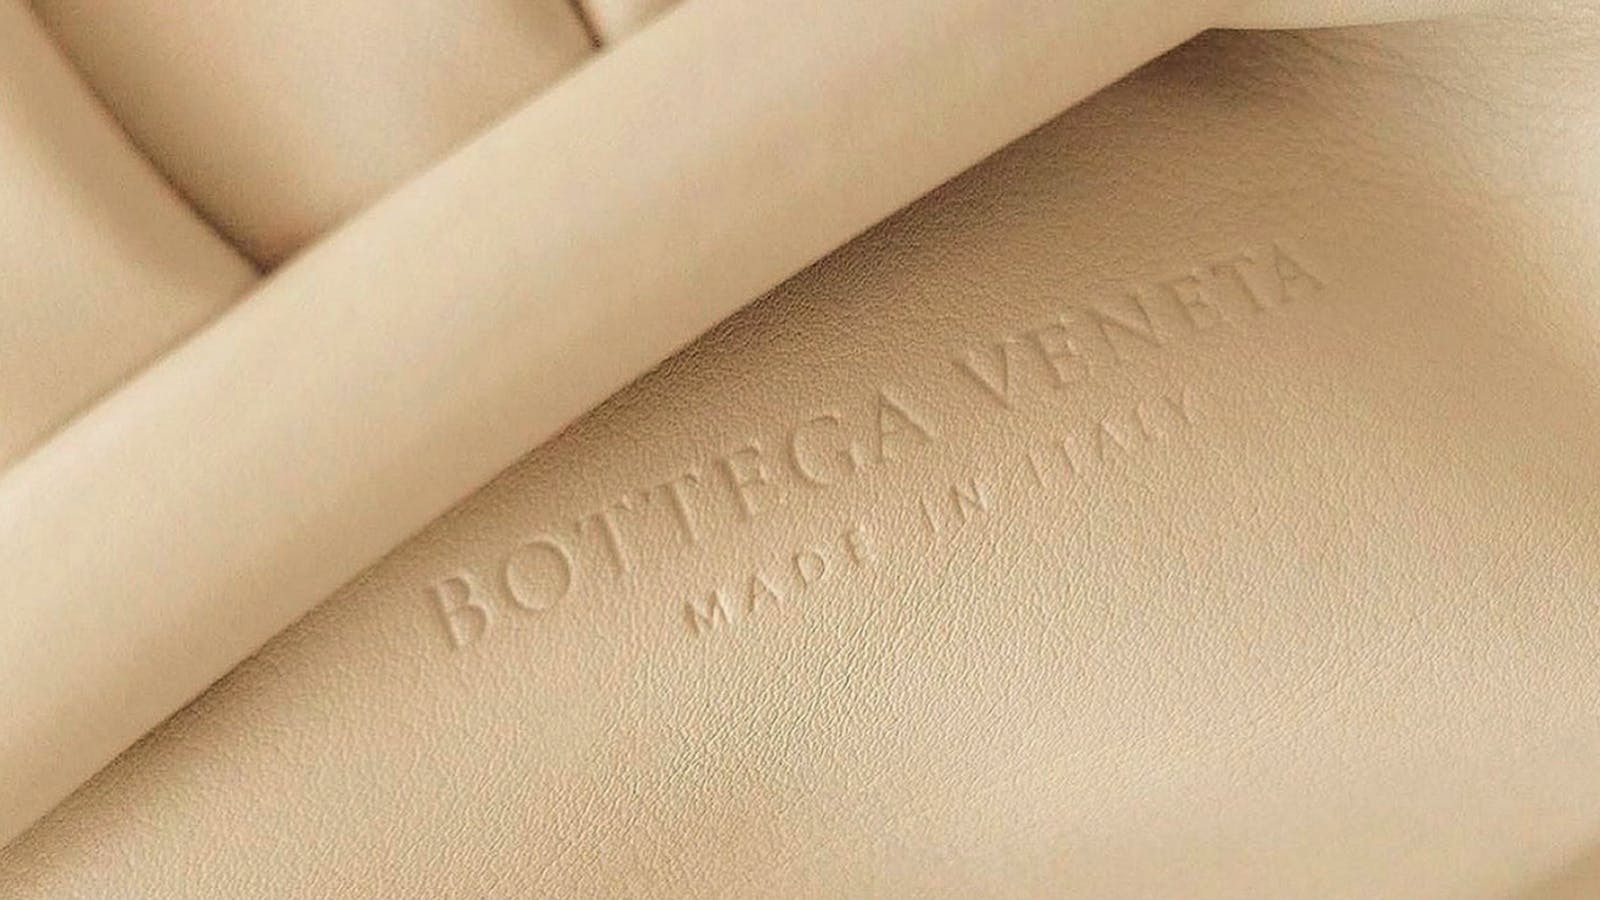 The History of Bottega Veneta: Behind the Brand